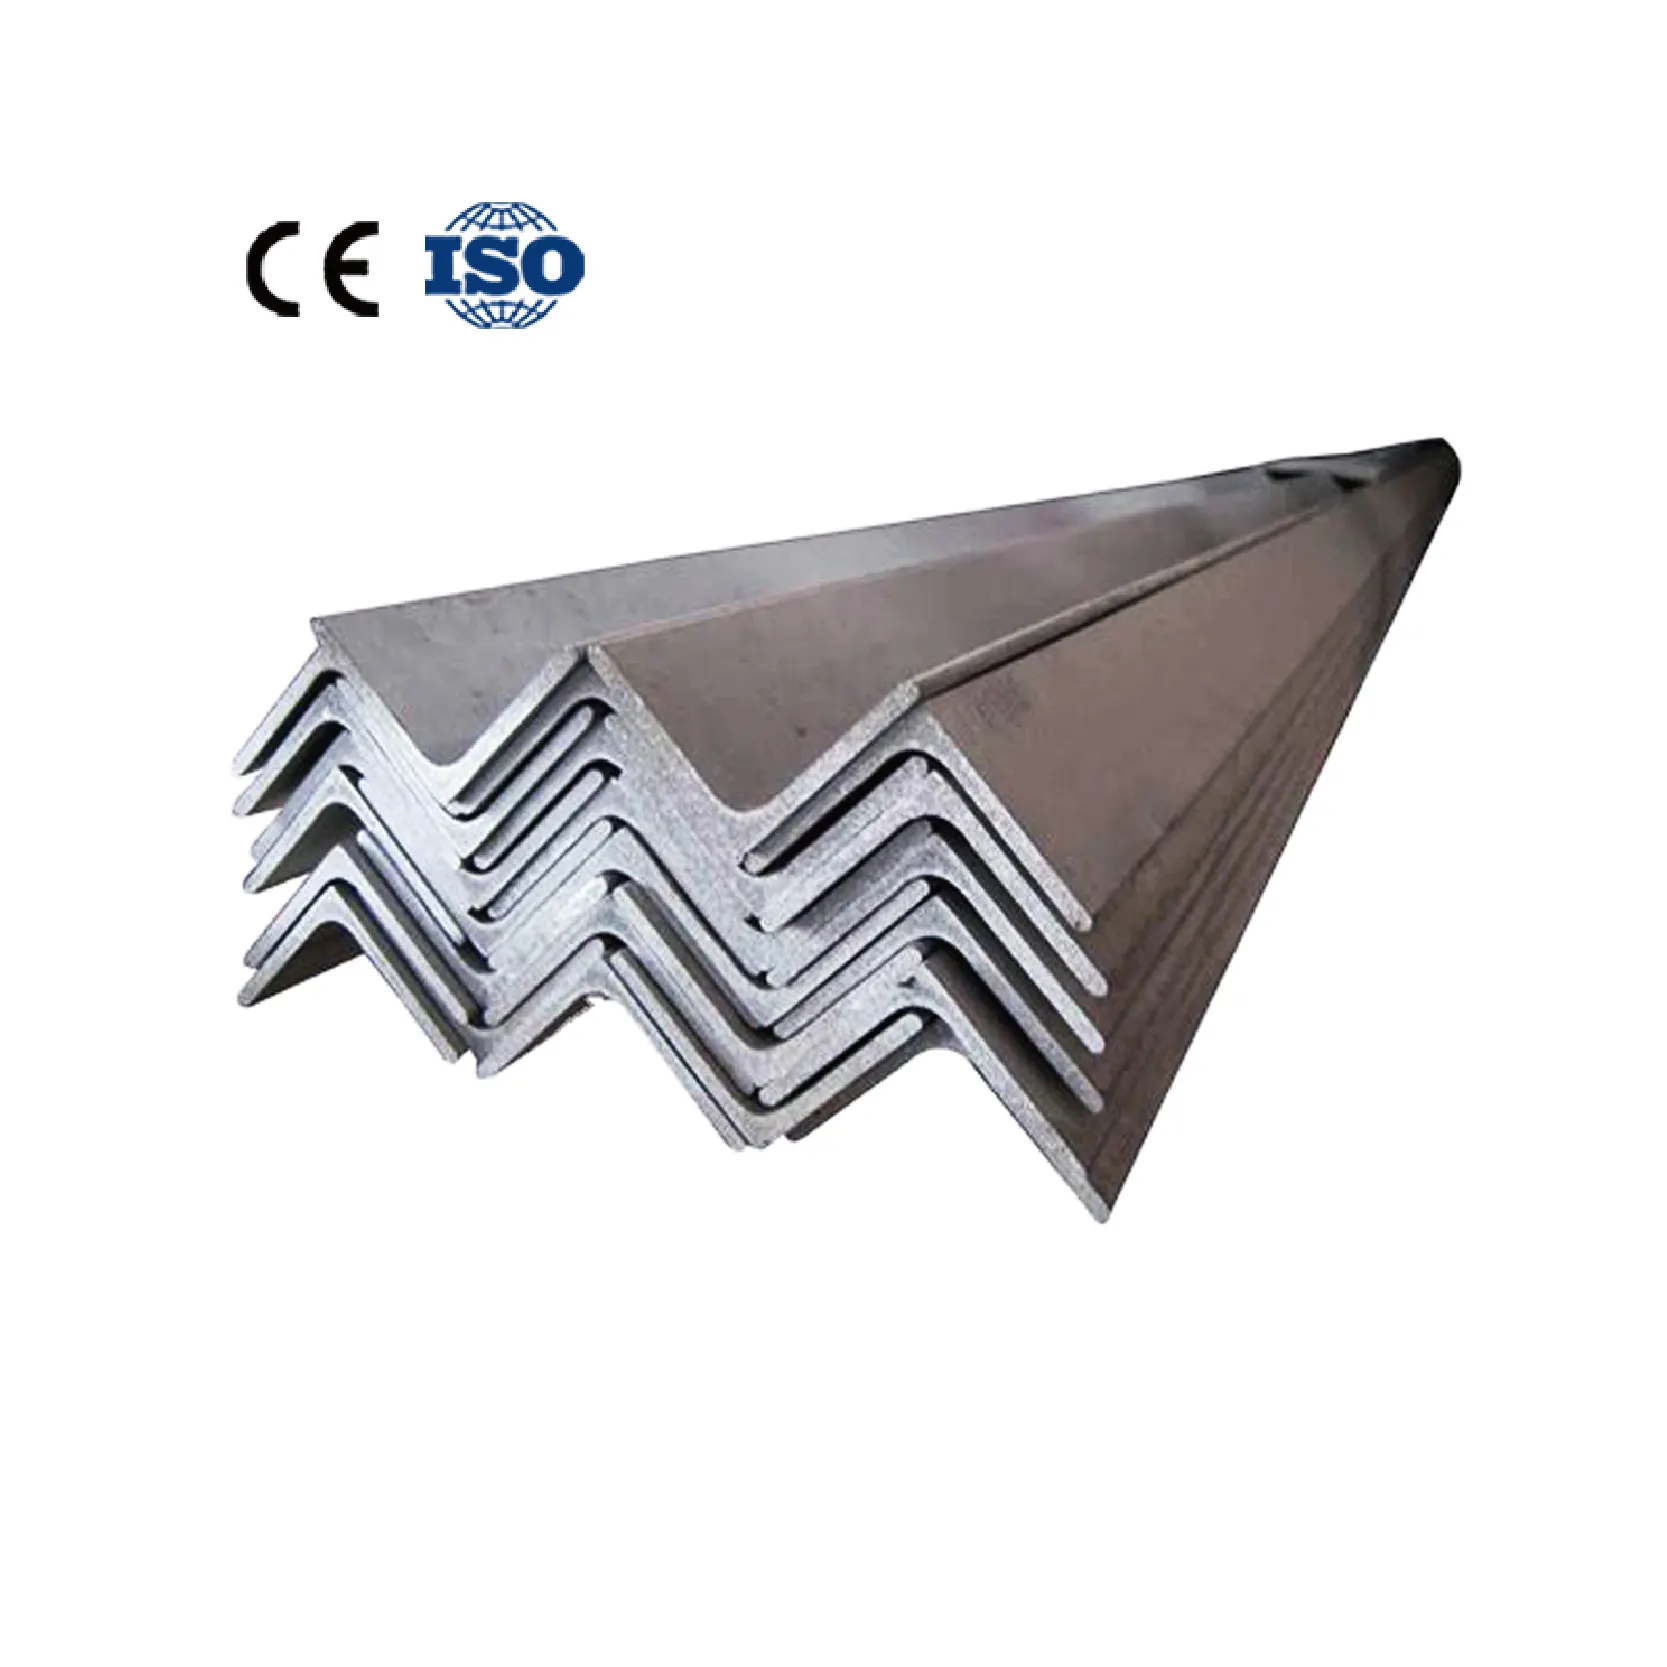 Astm A36 Q235 Q345 universale carbonio alluminio inox barra angolare acciaio